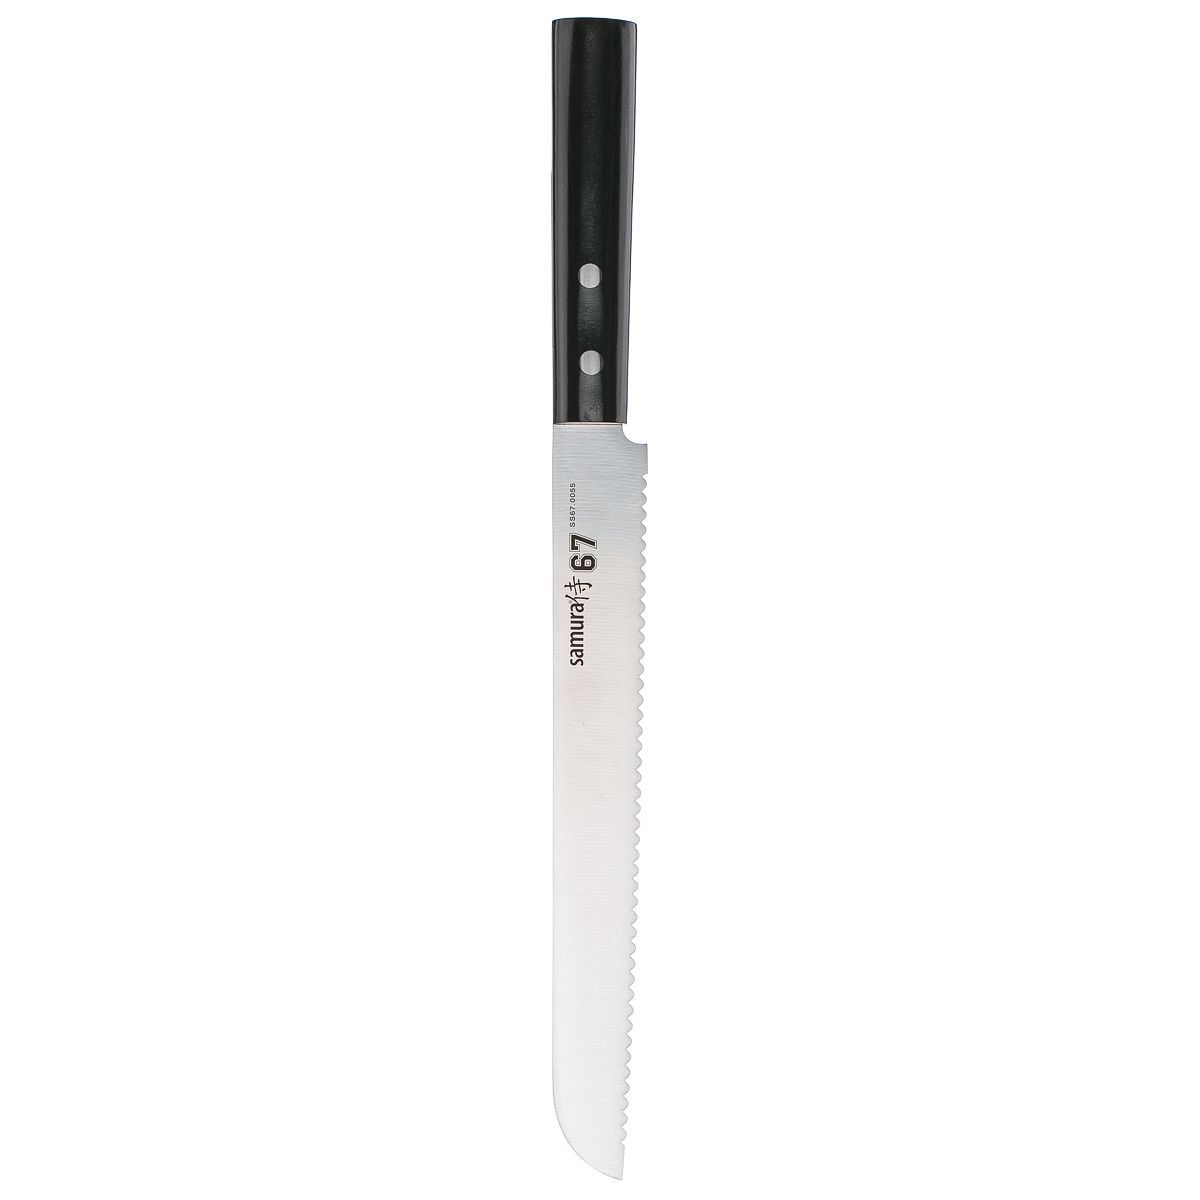 фото Нож для хлеба samura 67 ss67-0055, сталь aus-8, рукоять abs пластик